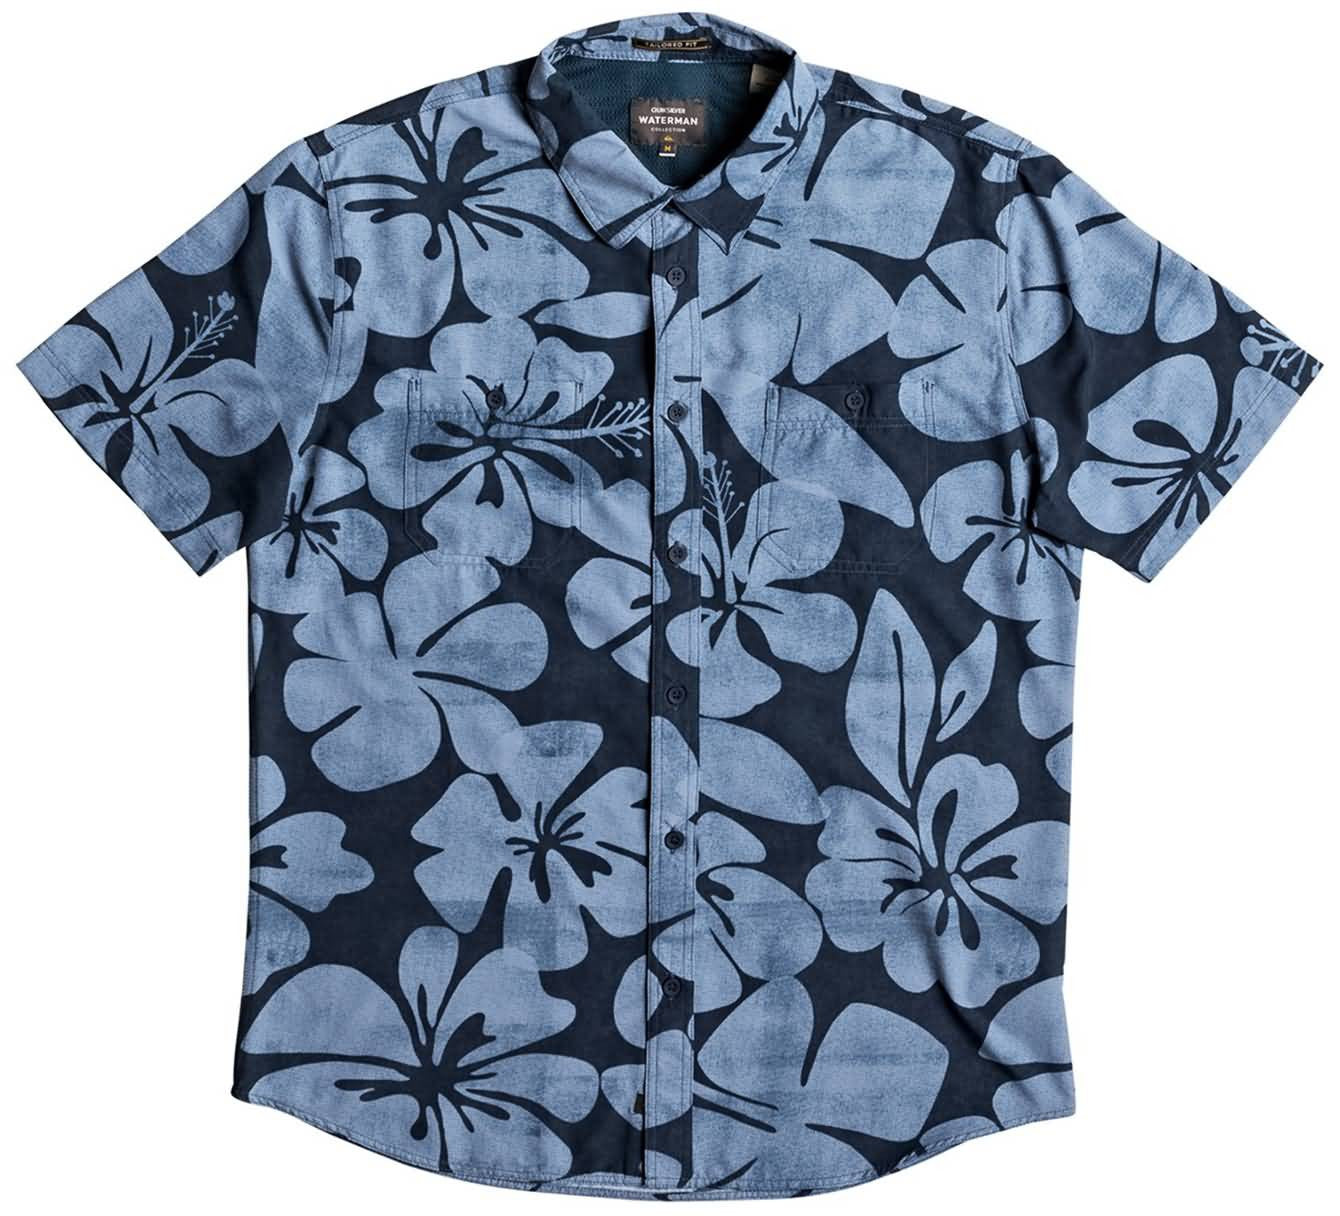 Quiksilver Waterman Fall 2017 Apparel | Beach Lifestyle Shirts